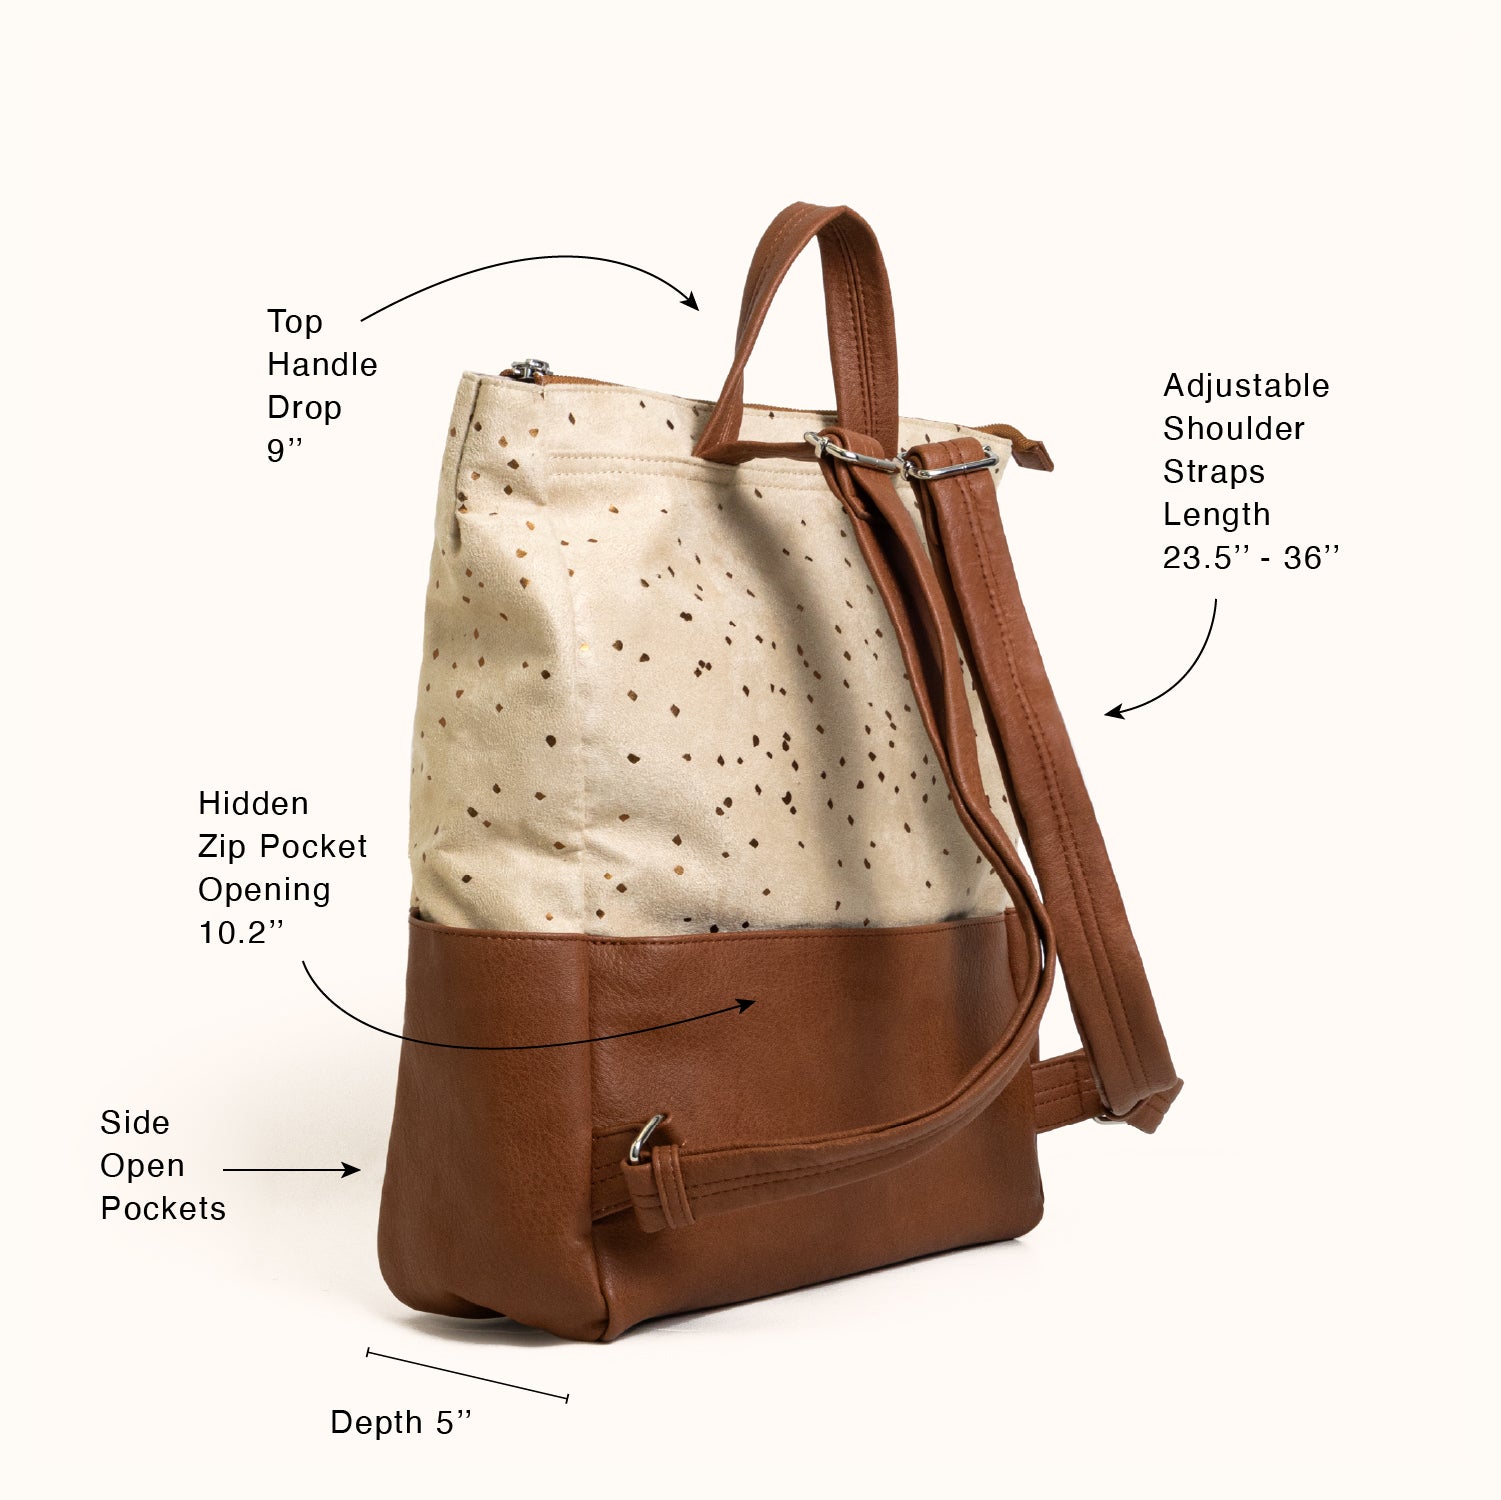 Metropolitan Backpack, Confetti Sand | Vegan Backpack | Lee Coren